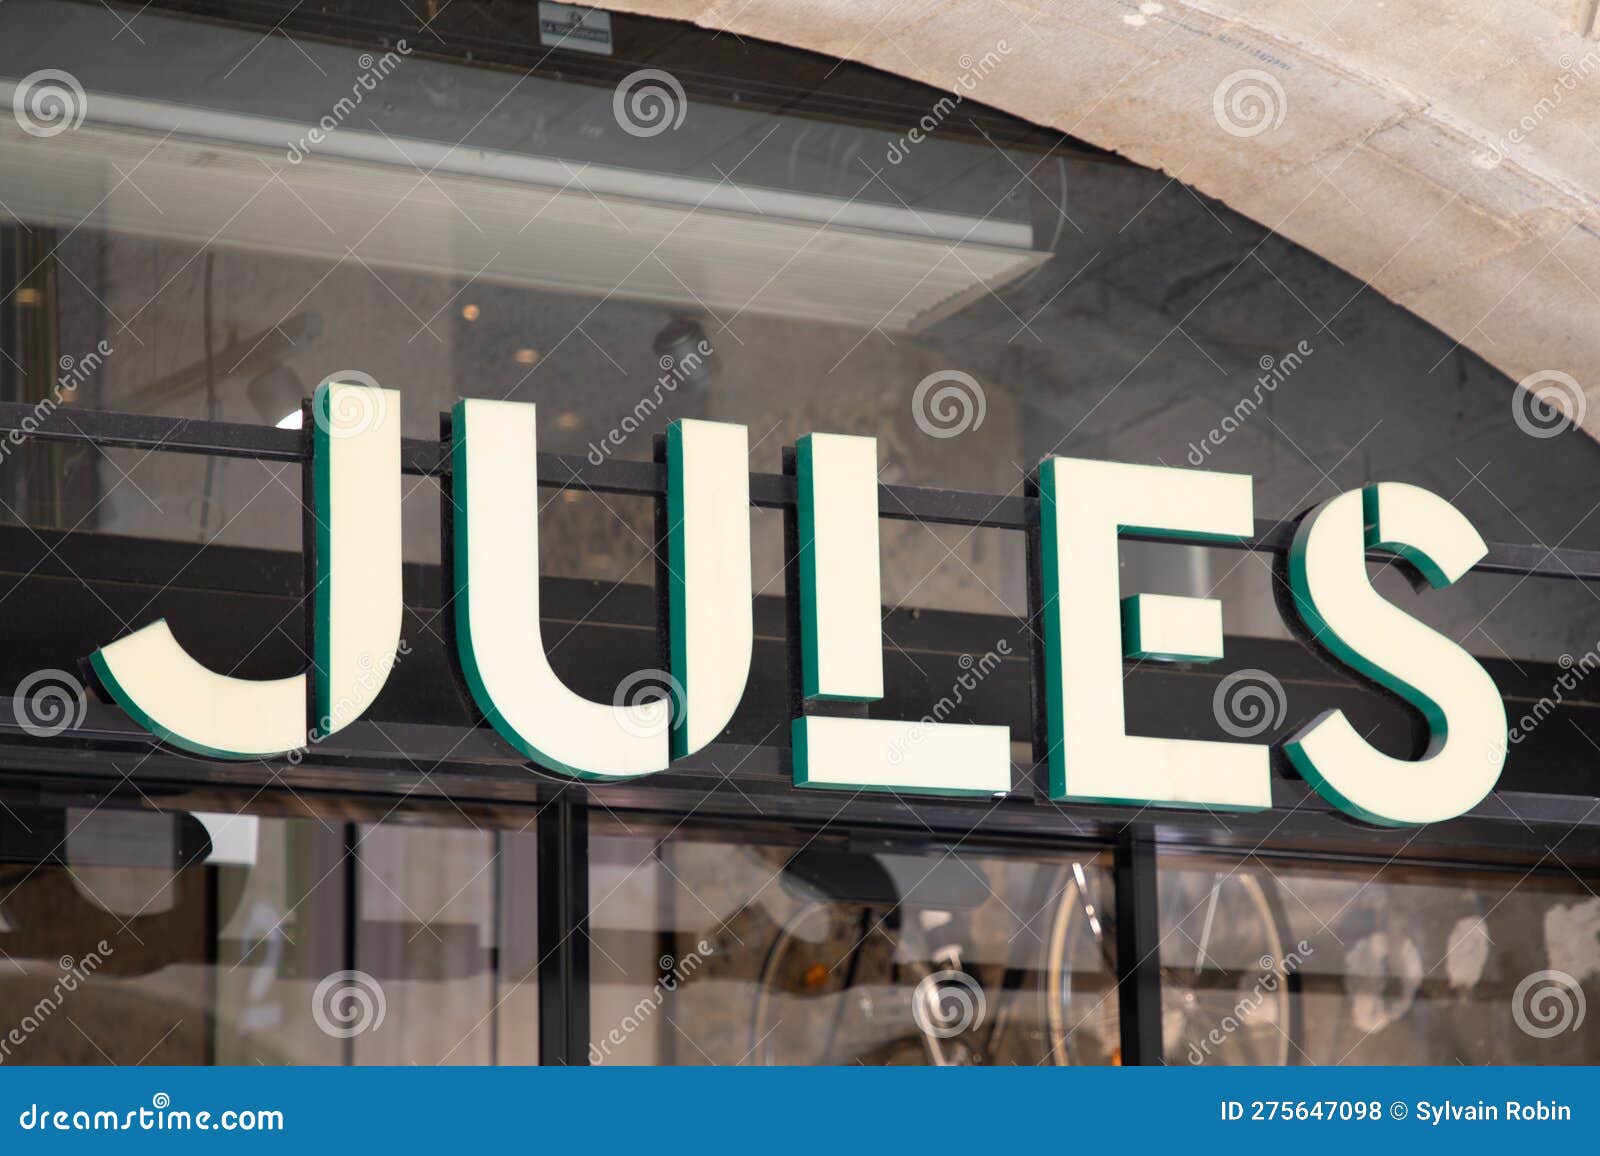 Jules Men Sign Text Store and Logo Brand Shop on Facade Entrance ...